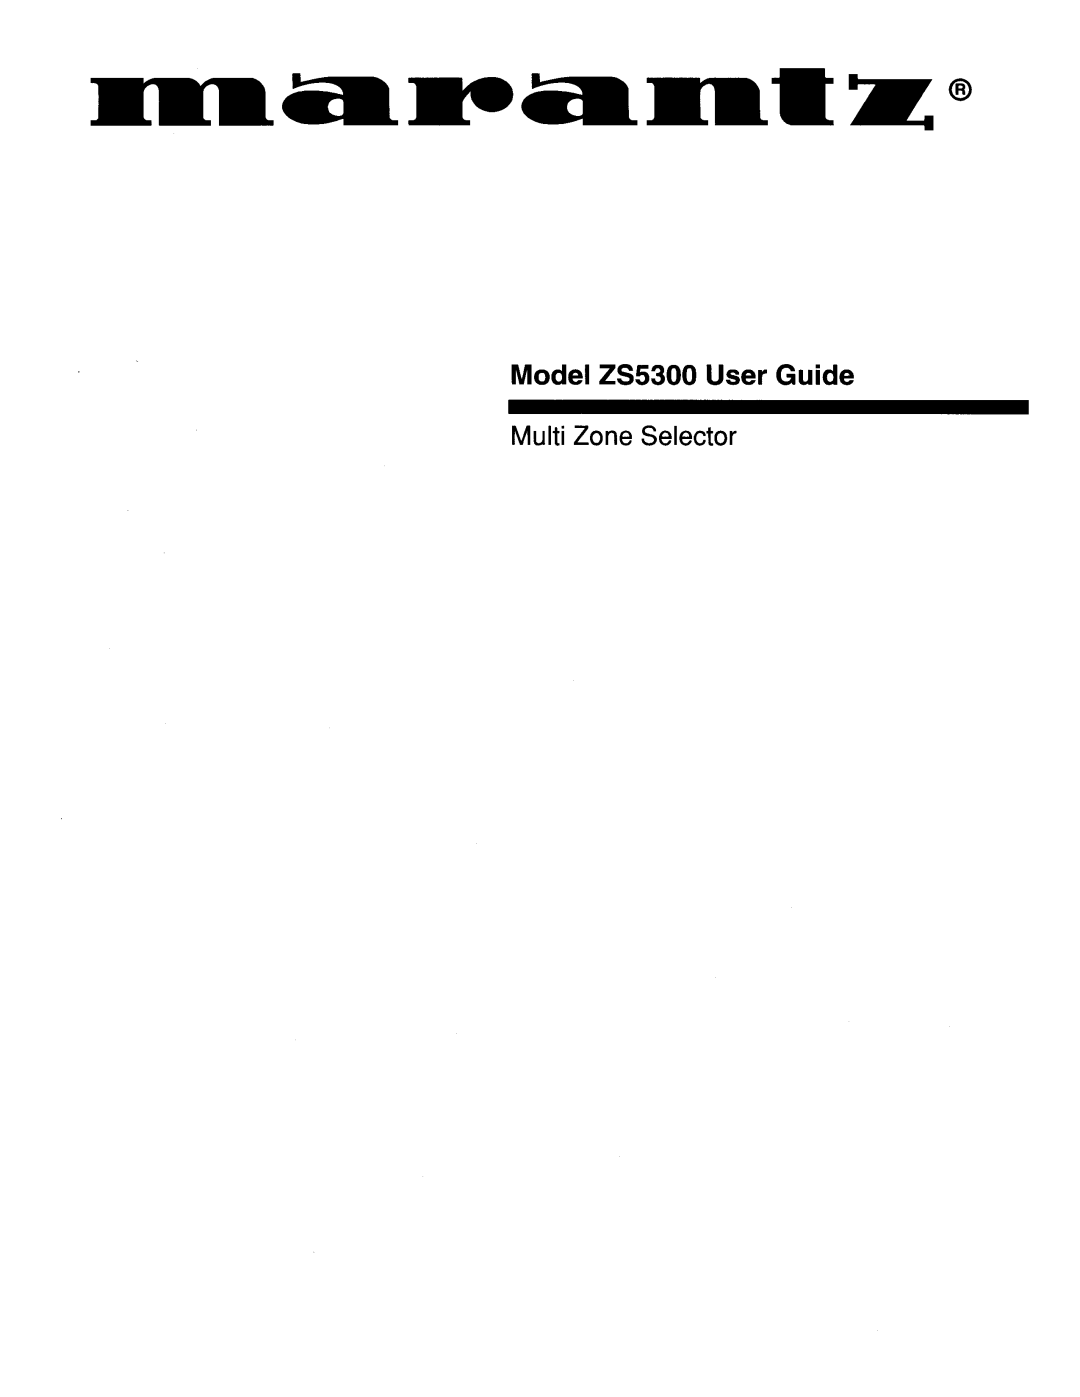 Marantz manual Model ZS5300 User Guide, Multi Zone Selector 